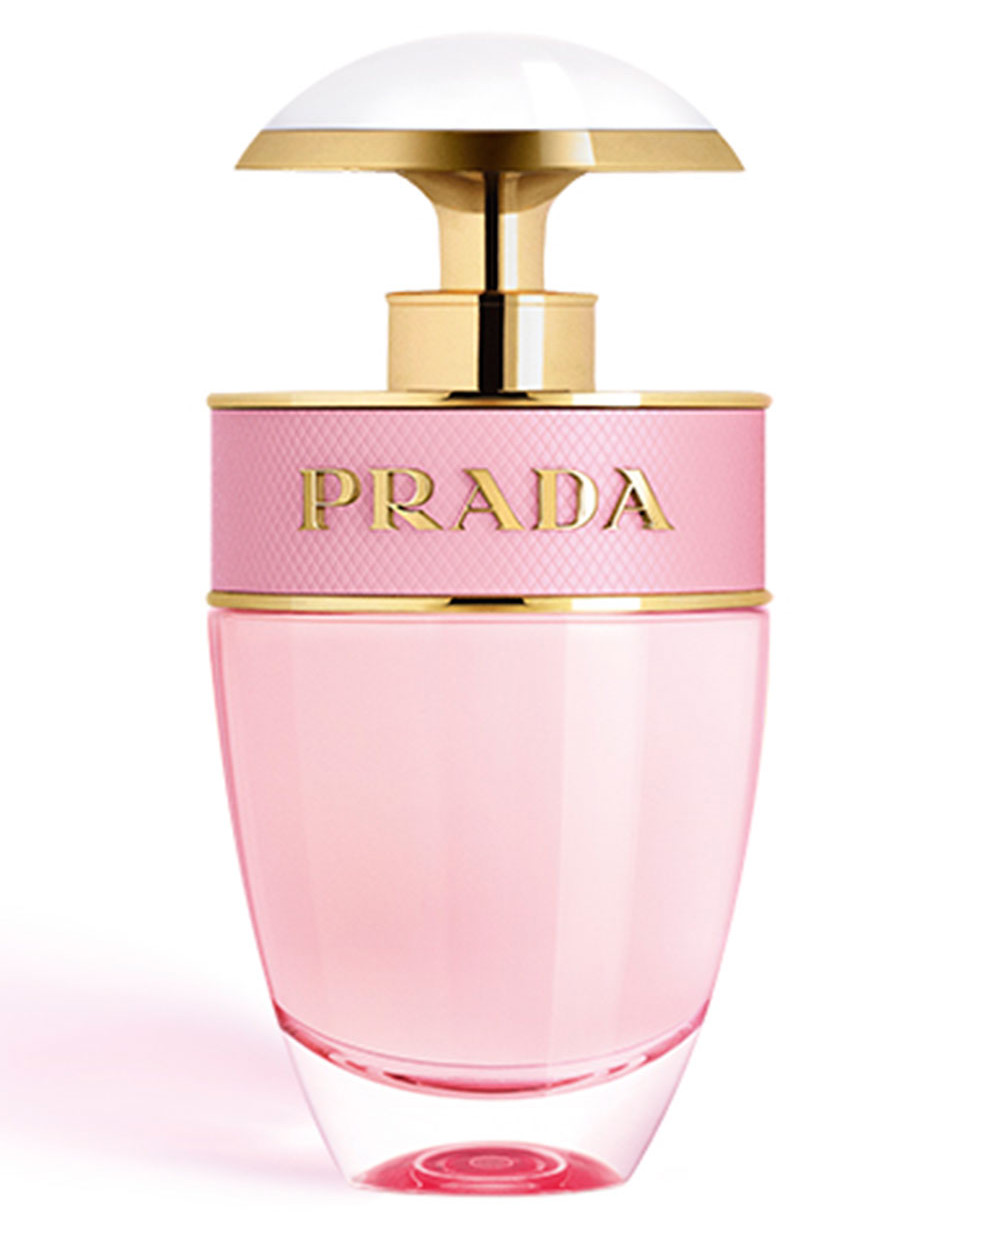 Prada Candy Florale Kiss Prada perfume - una nuevo fragancia para